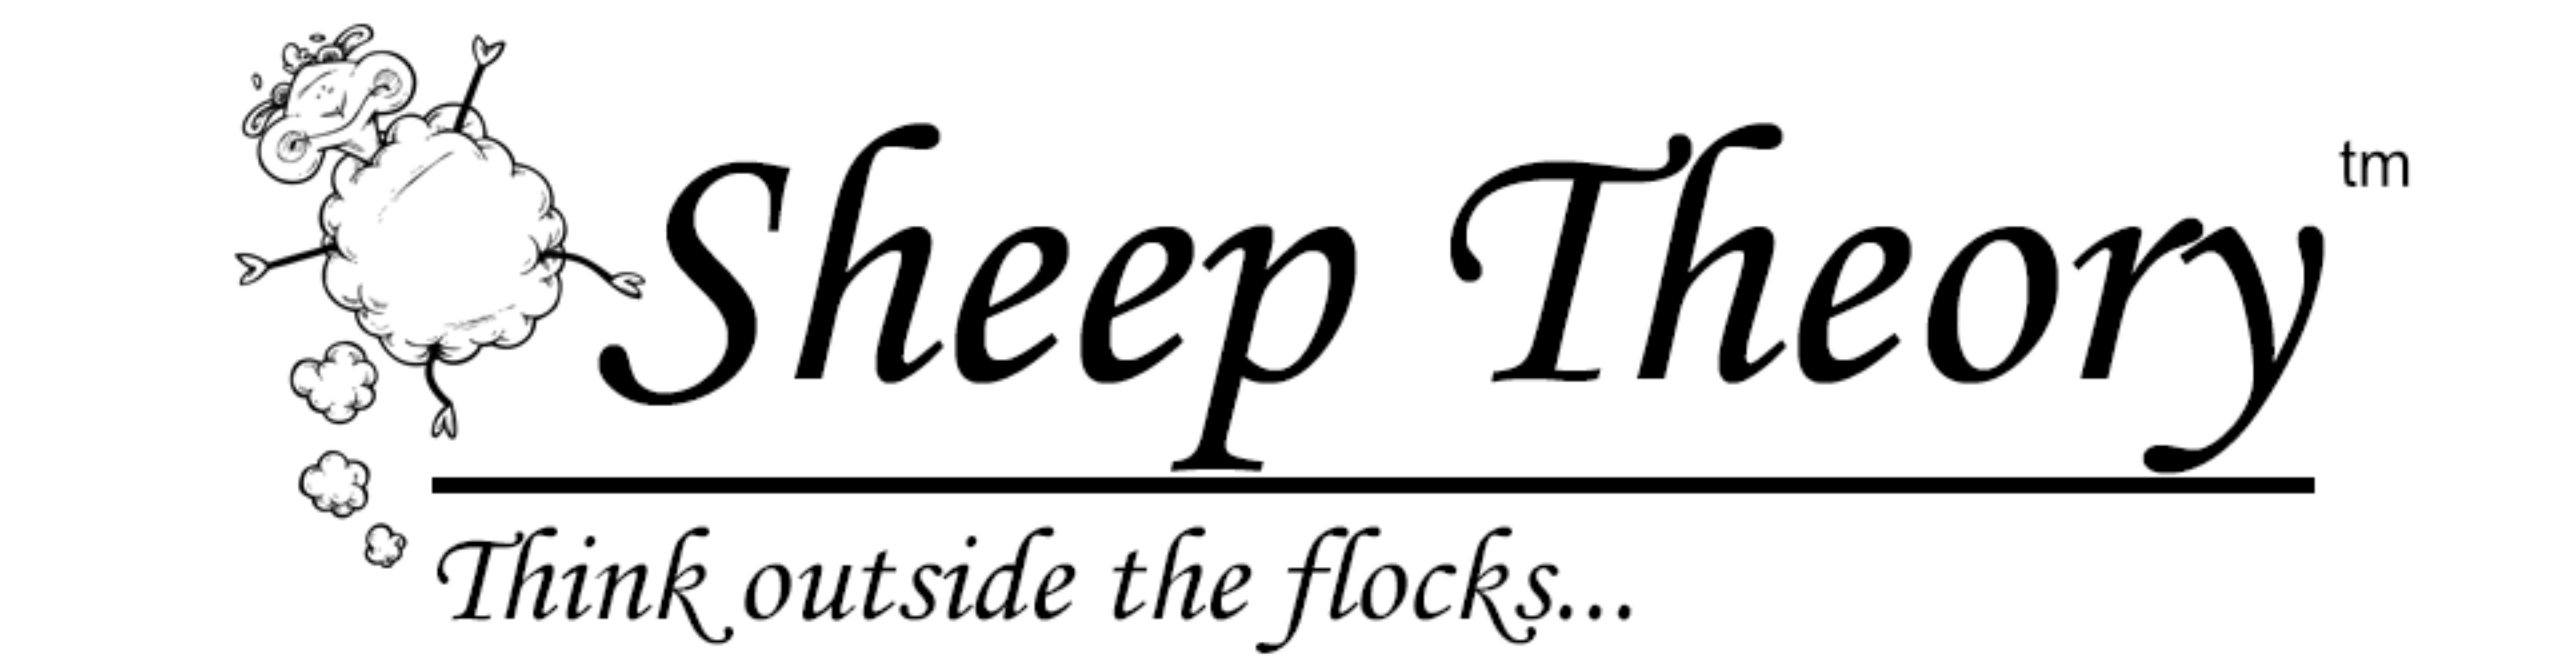 Sheep Theory Logo